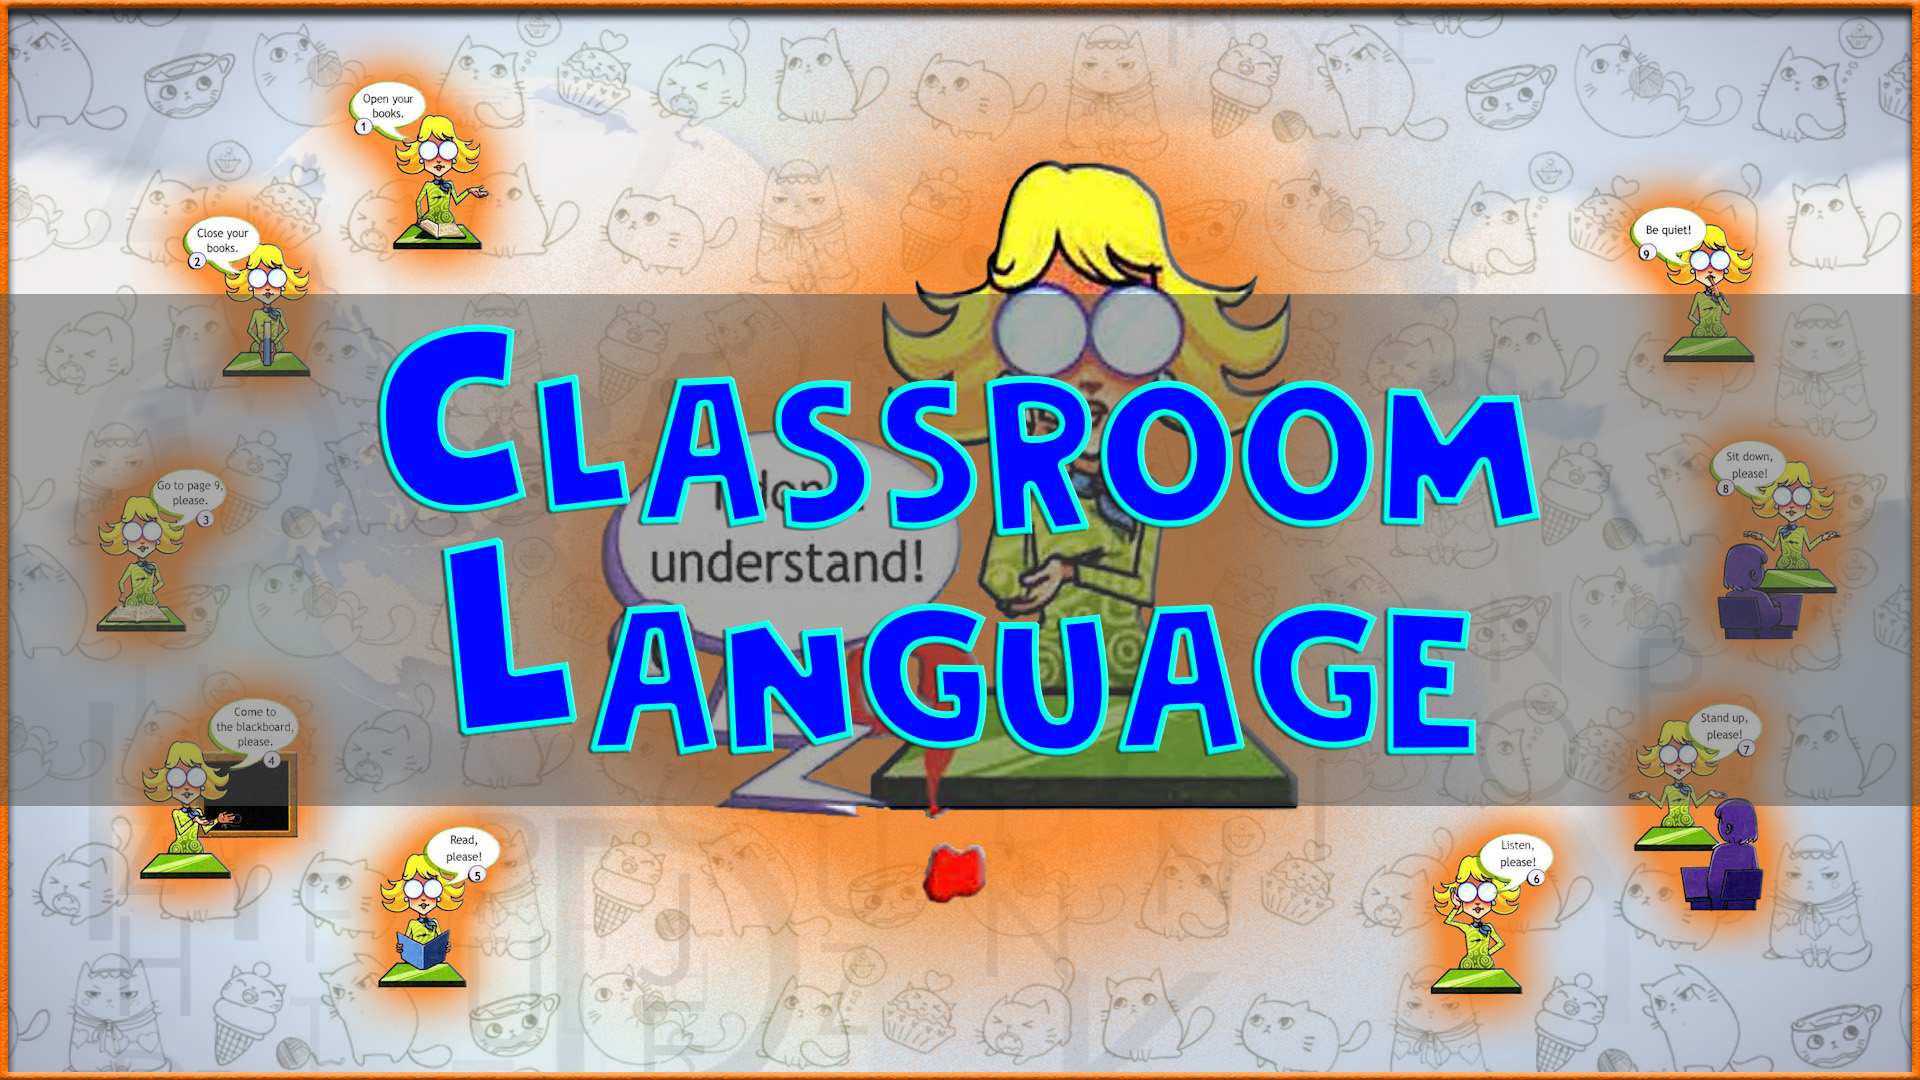 Classroom Language - Learning English Words. Язык в классе - Учим Английские слова